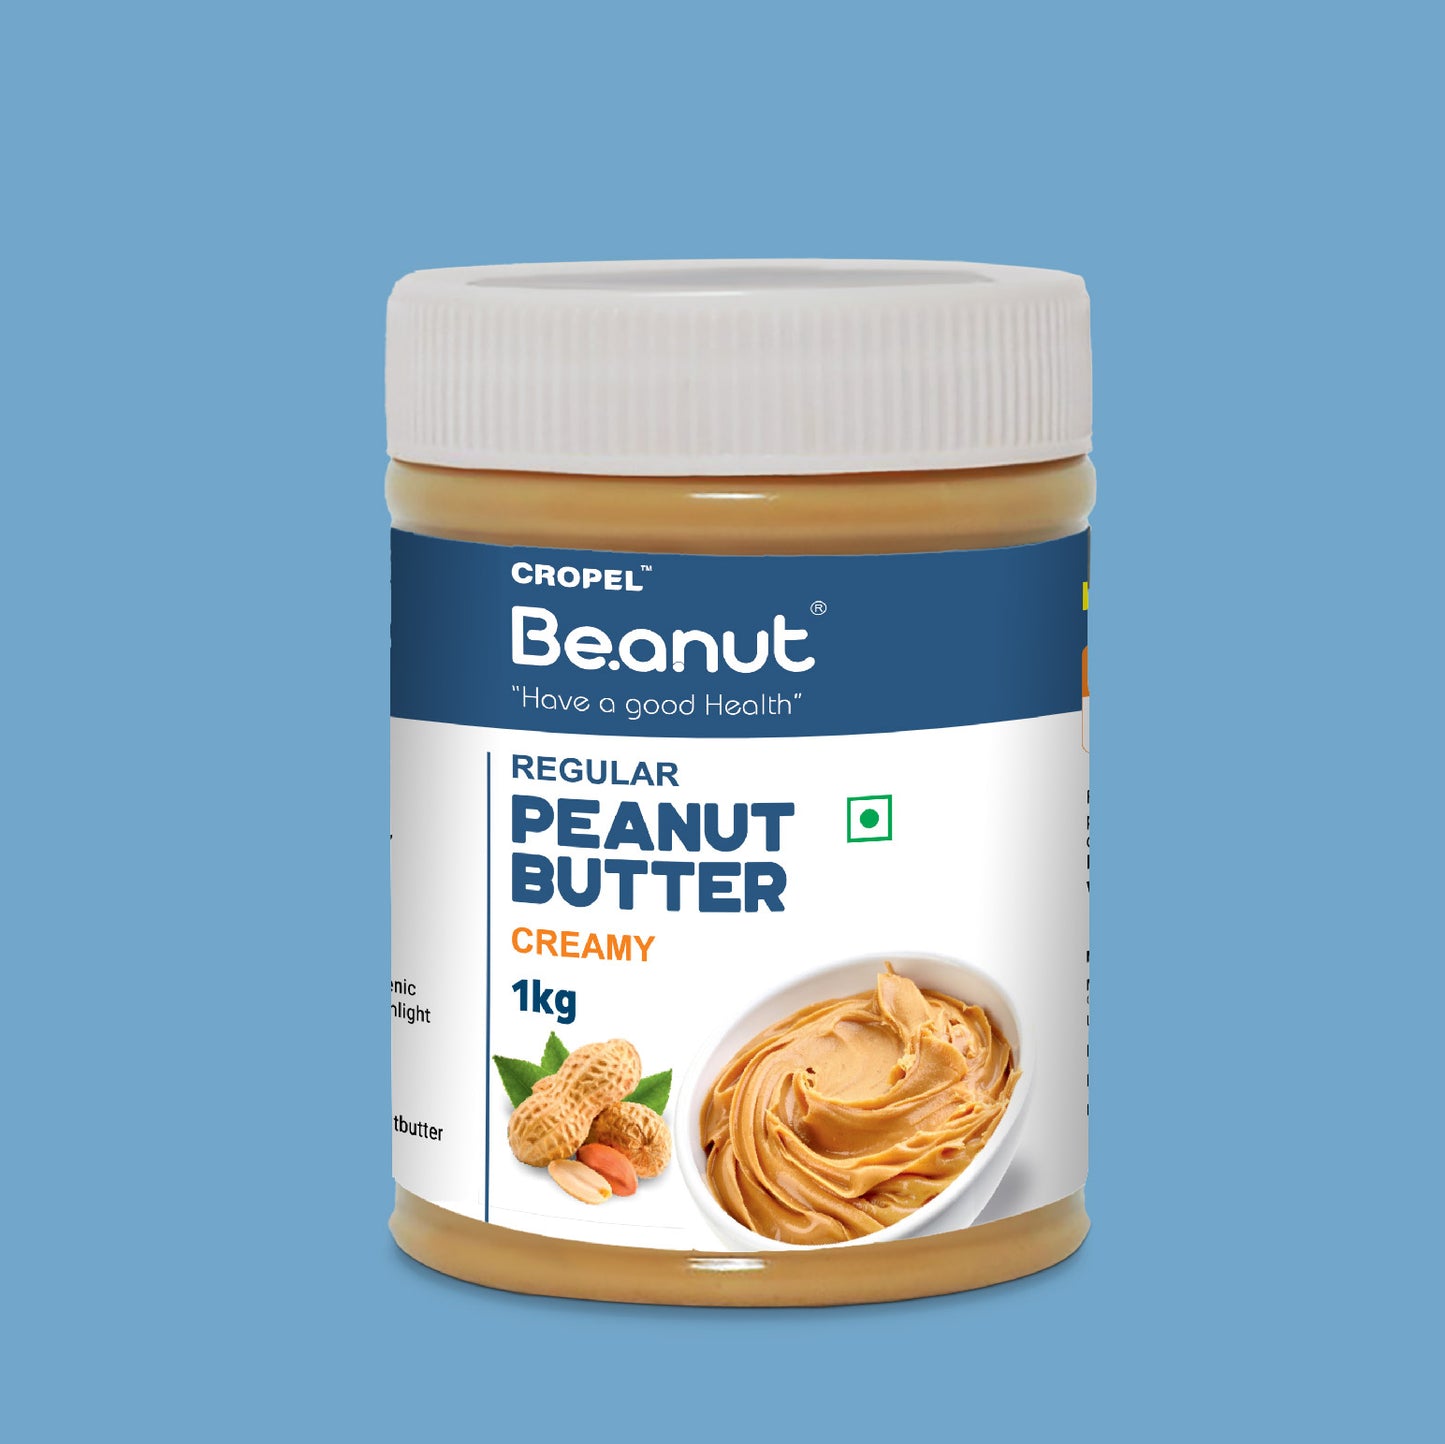 Regular Peanut Butter